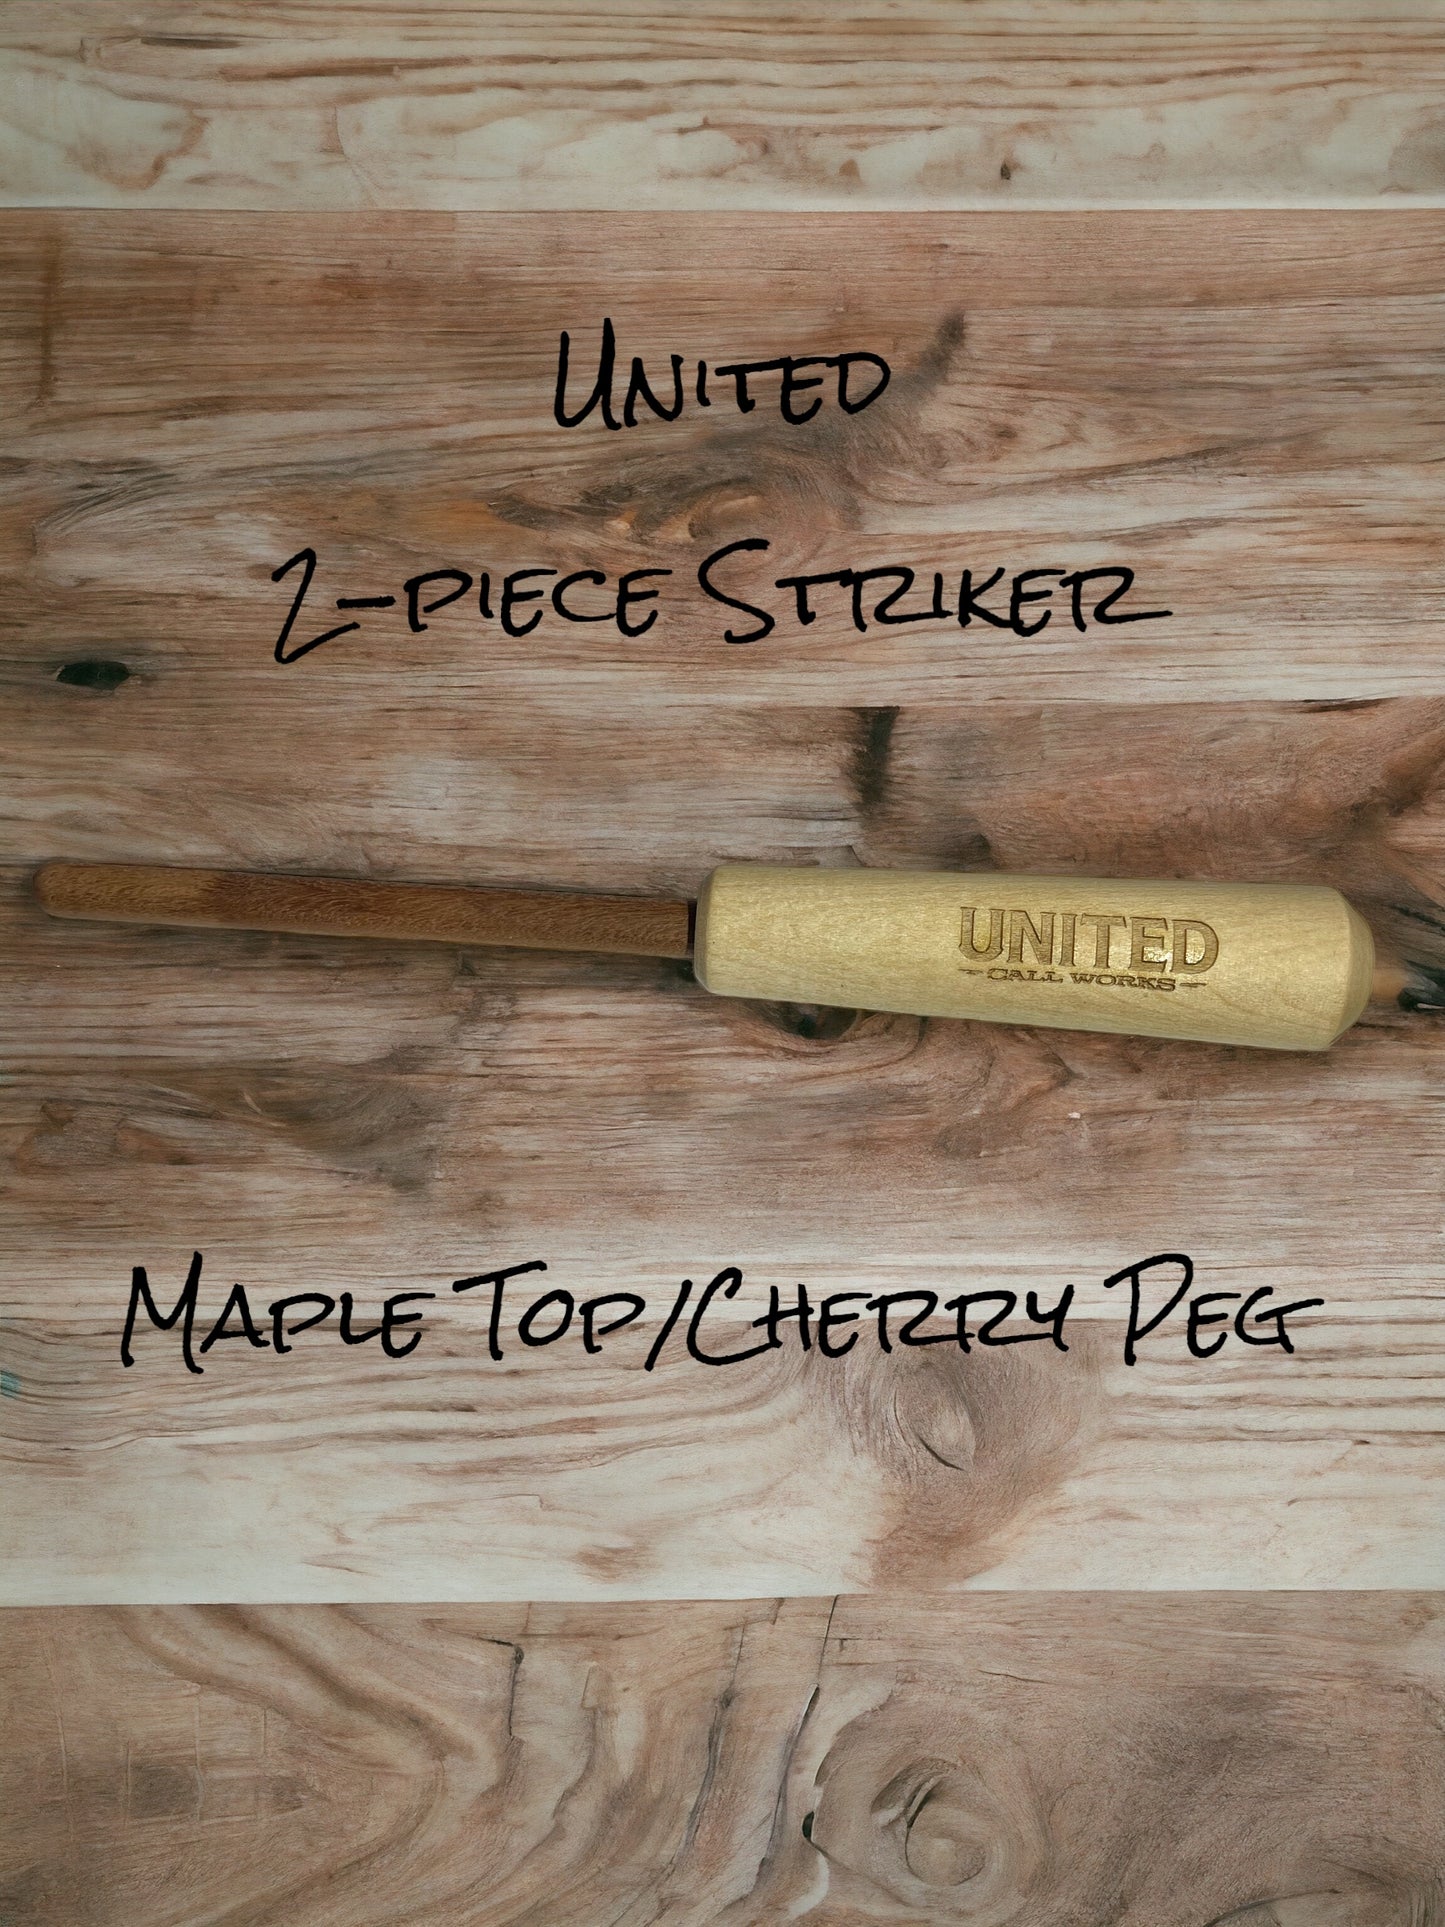 2-Piece Striker Maple Top / Cherry Peg